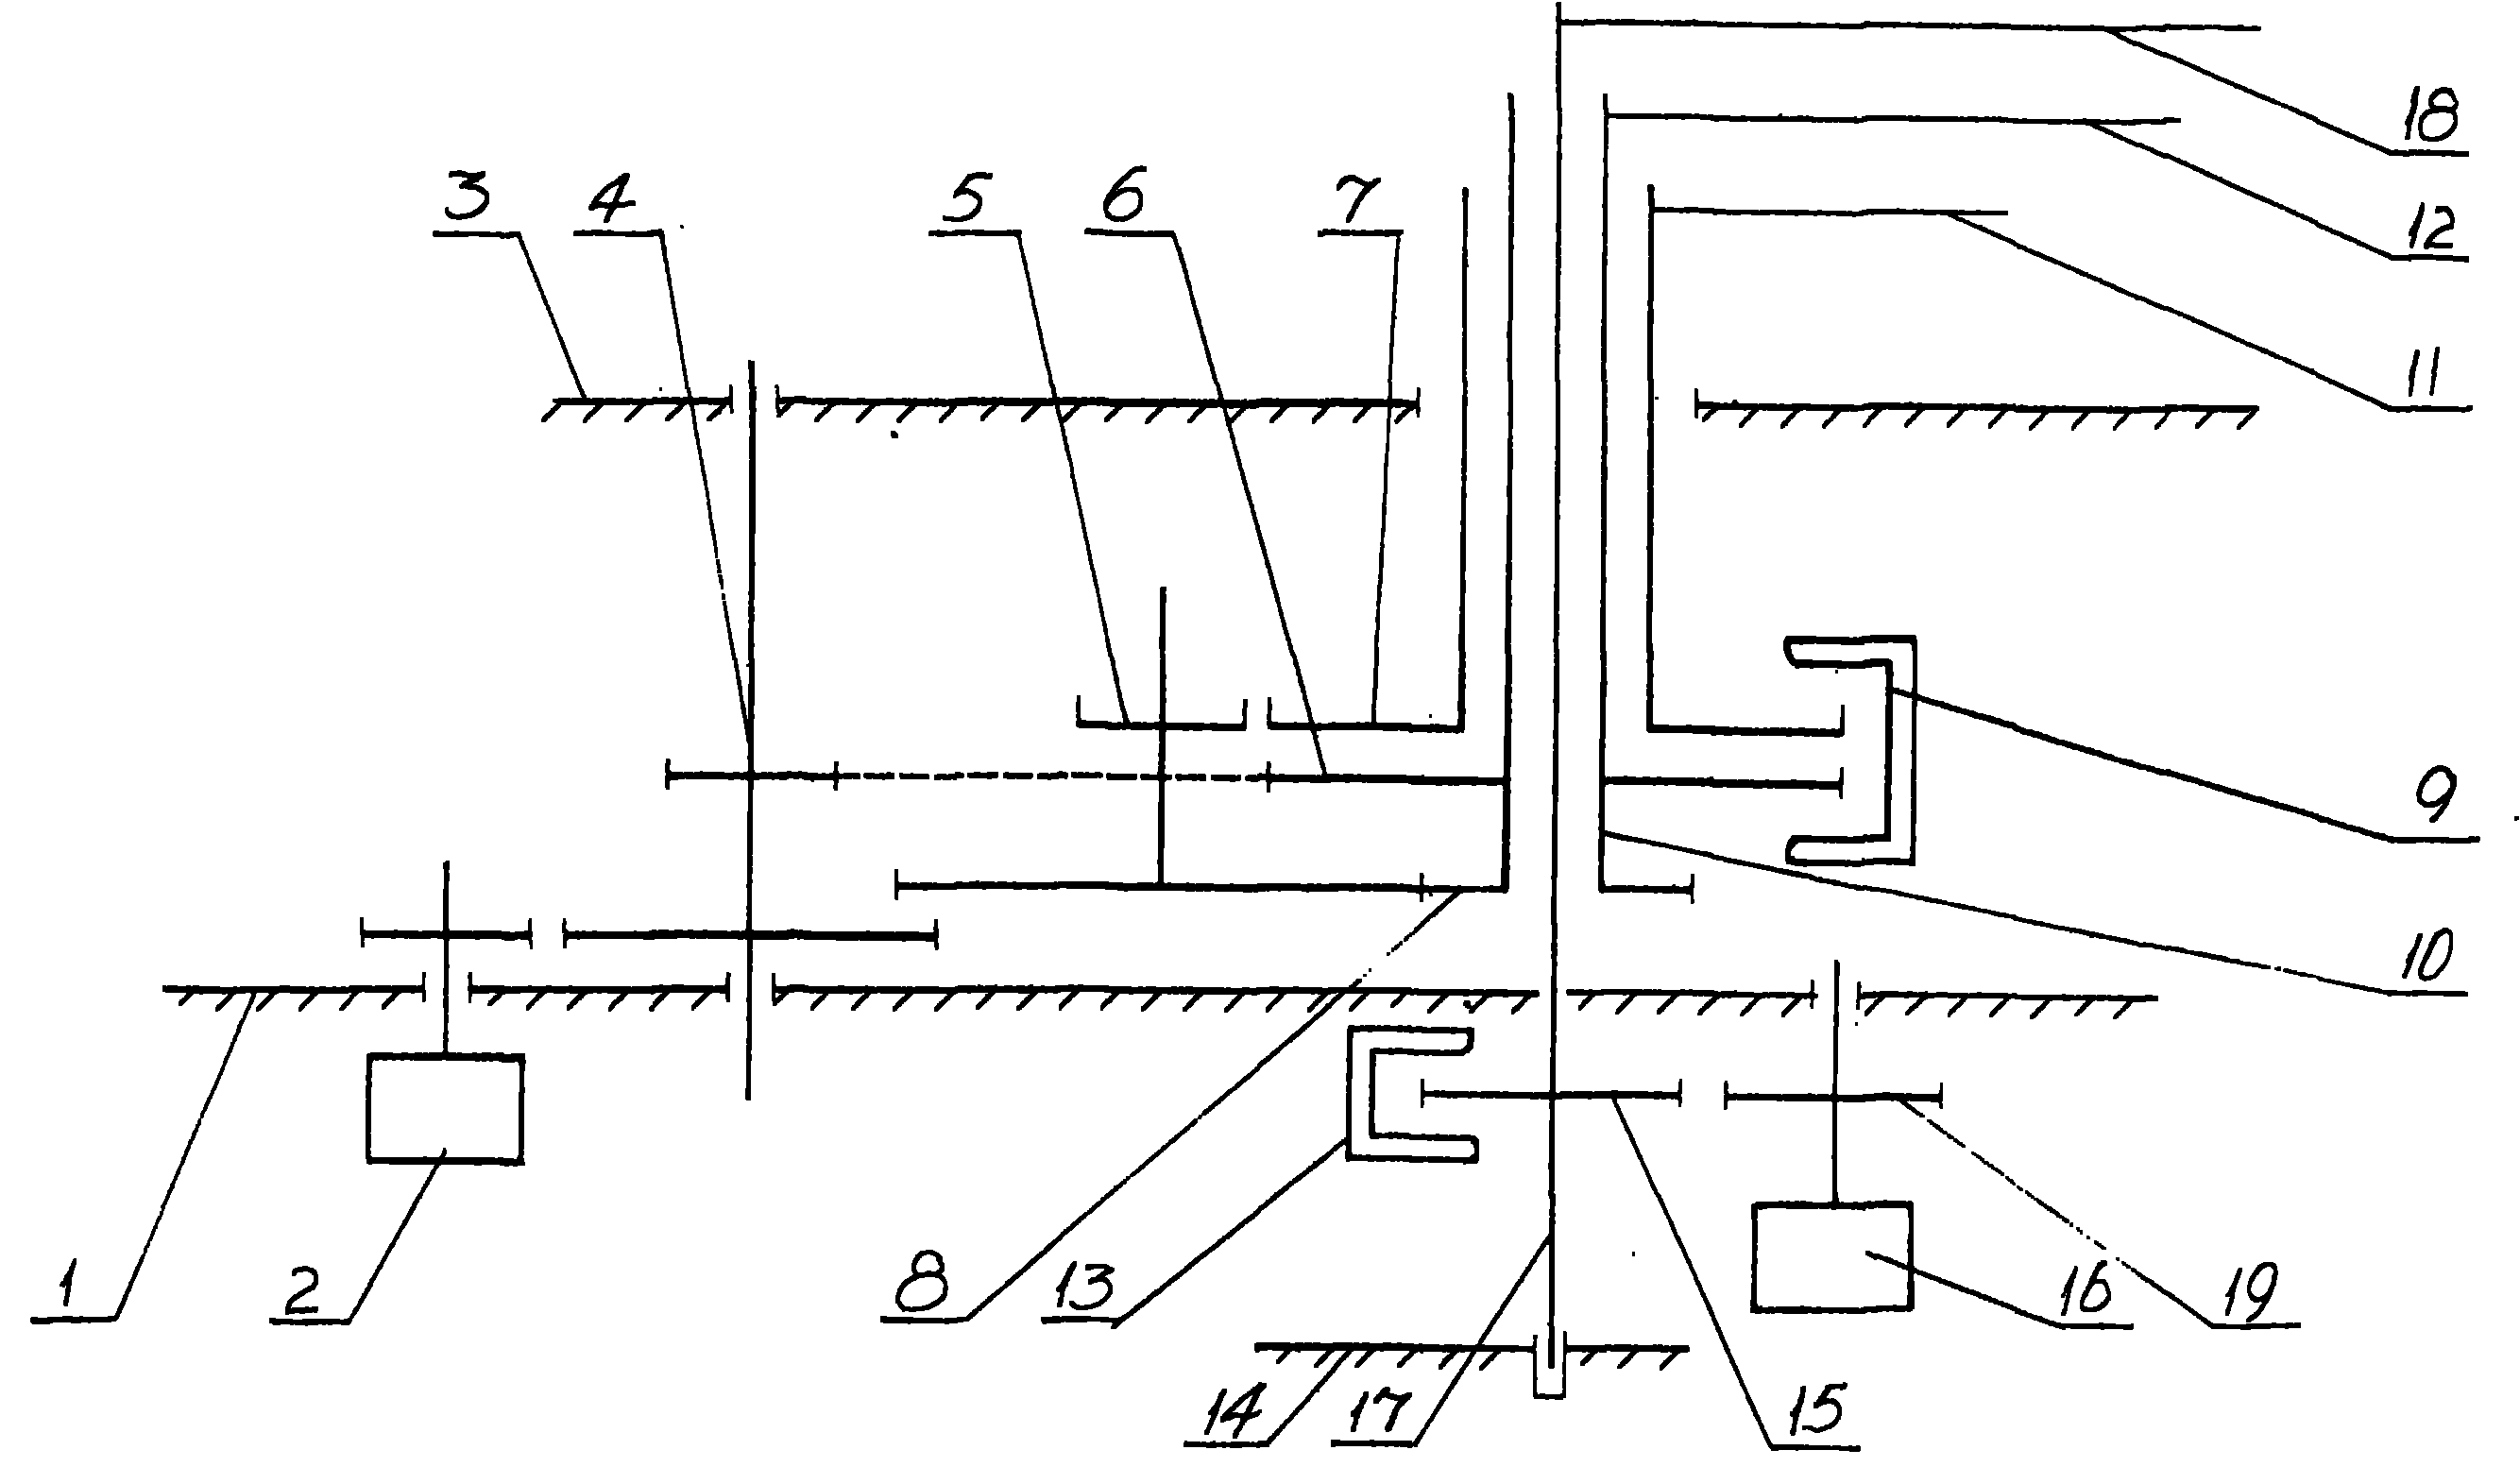 Control design method of regional clock cassette mechanism